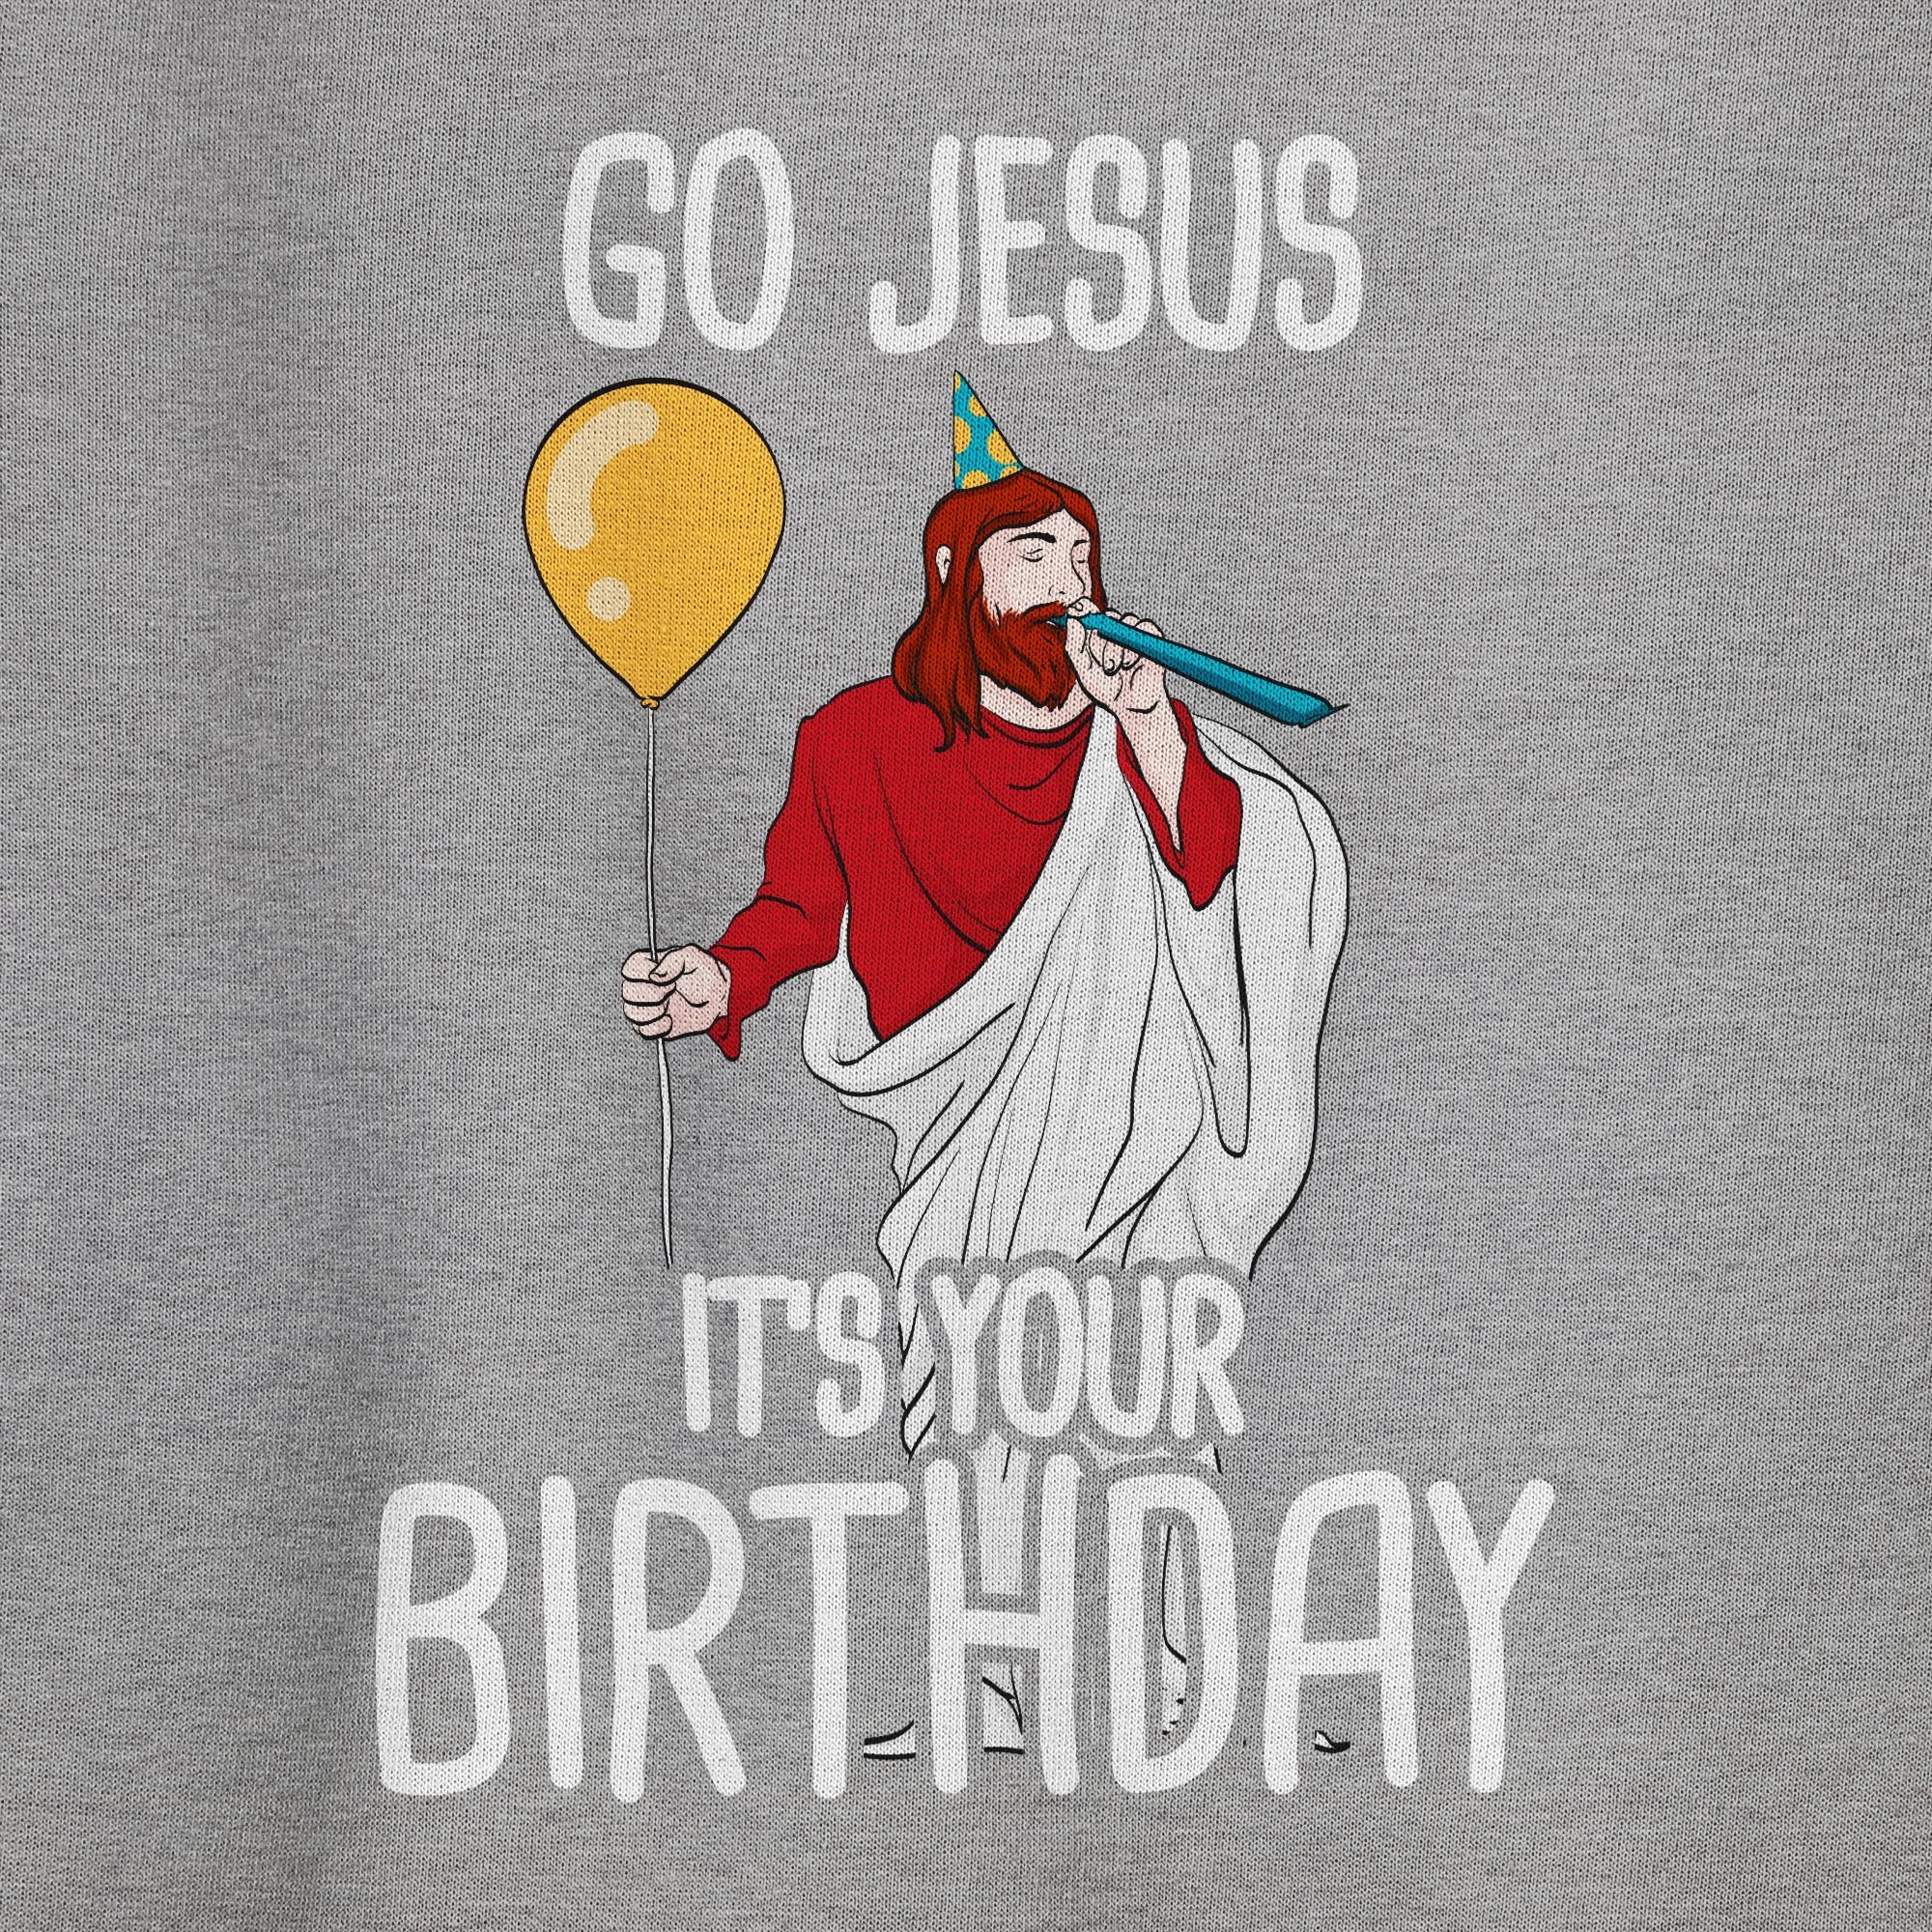 Sweatshirt meliert Go Kleidung Shirtracer it's 2 (1-tlg) Birthday your Grau Jesus Weihachten